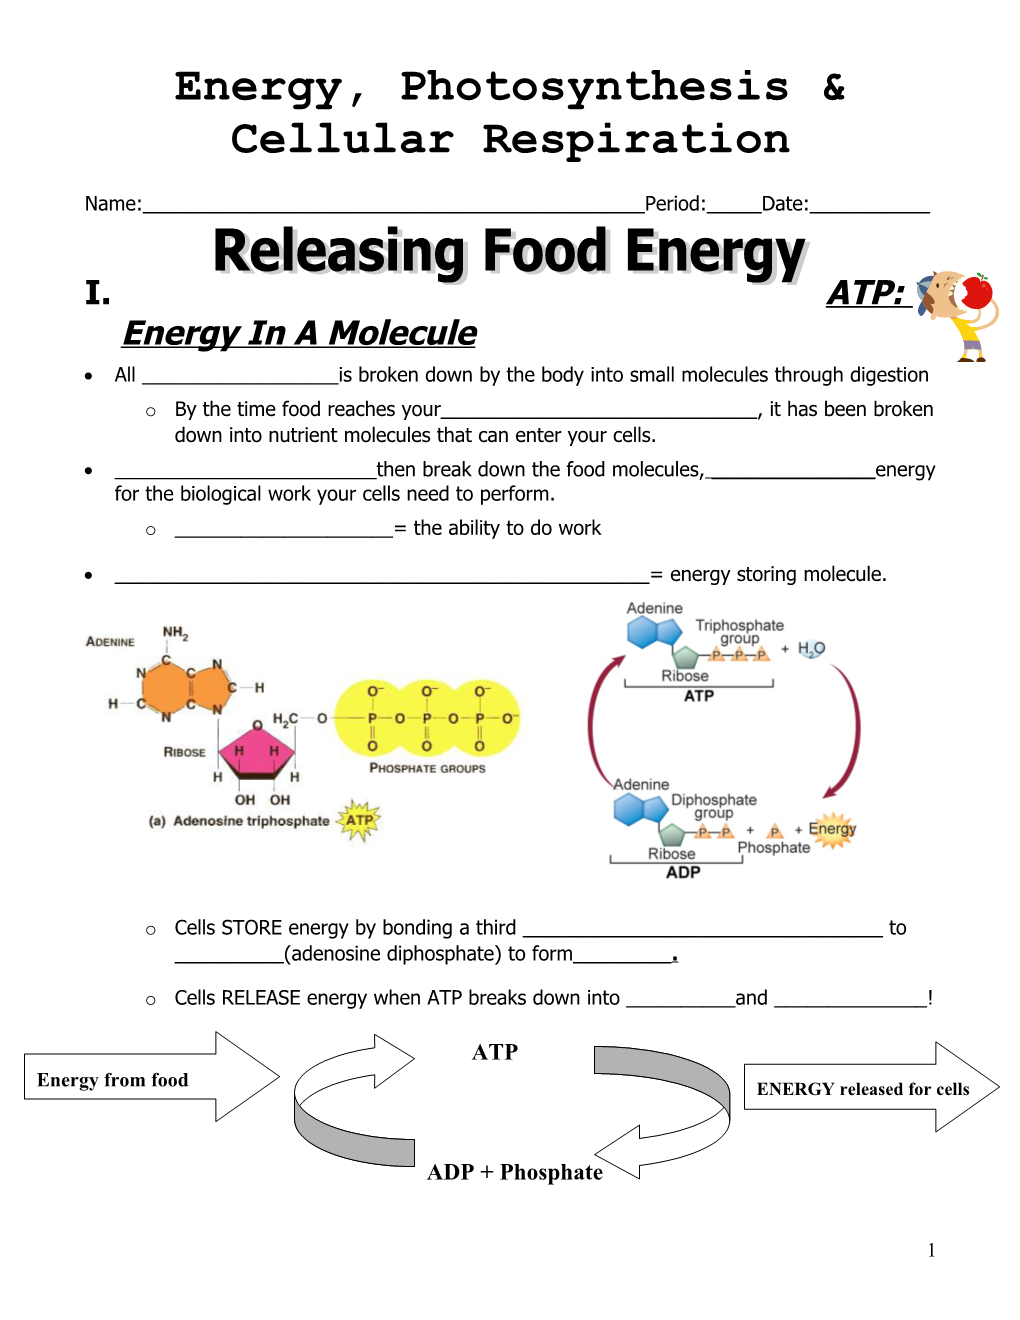 Energy, Photosynthesis & Cellular Respiration